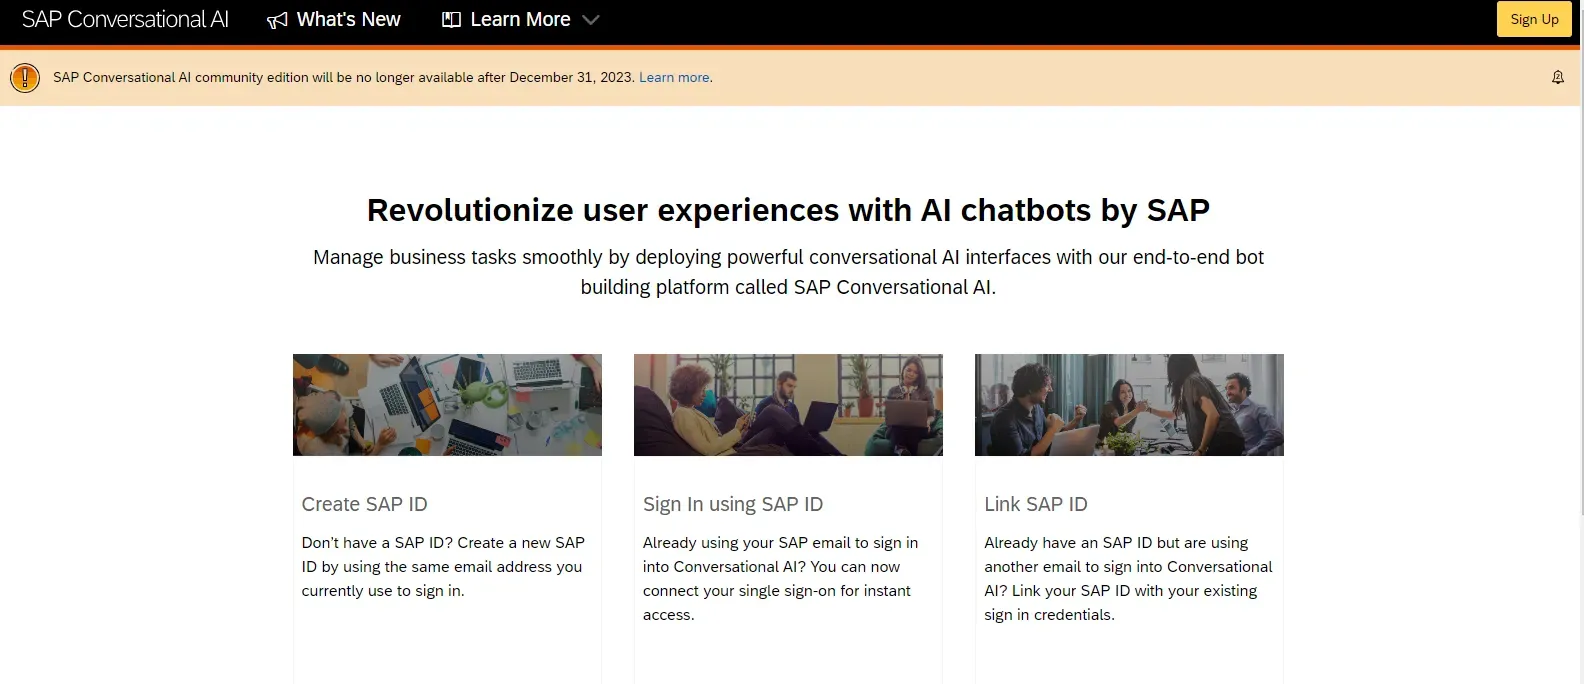 SAP Conversational AI